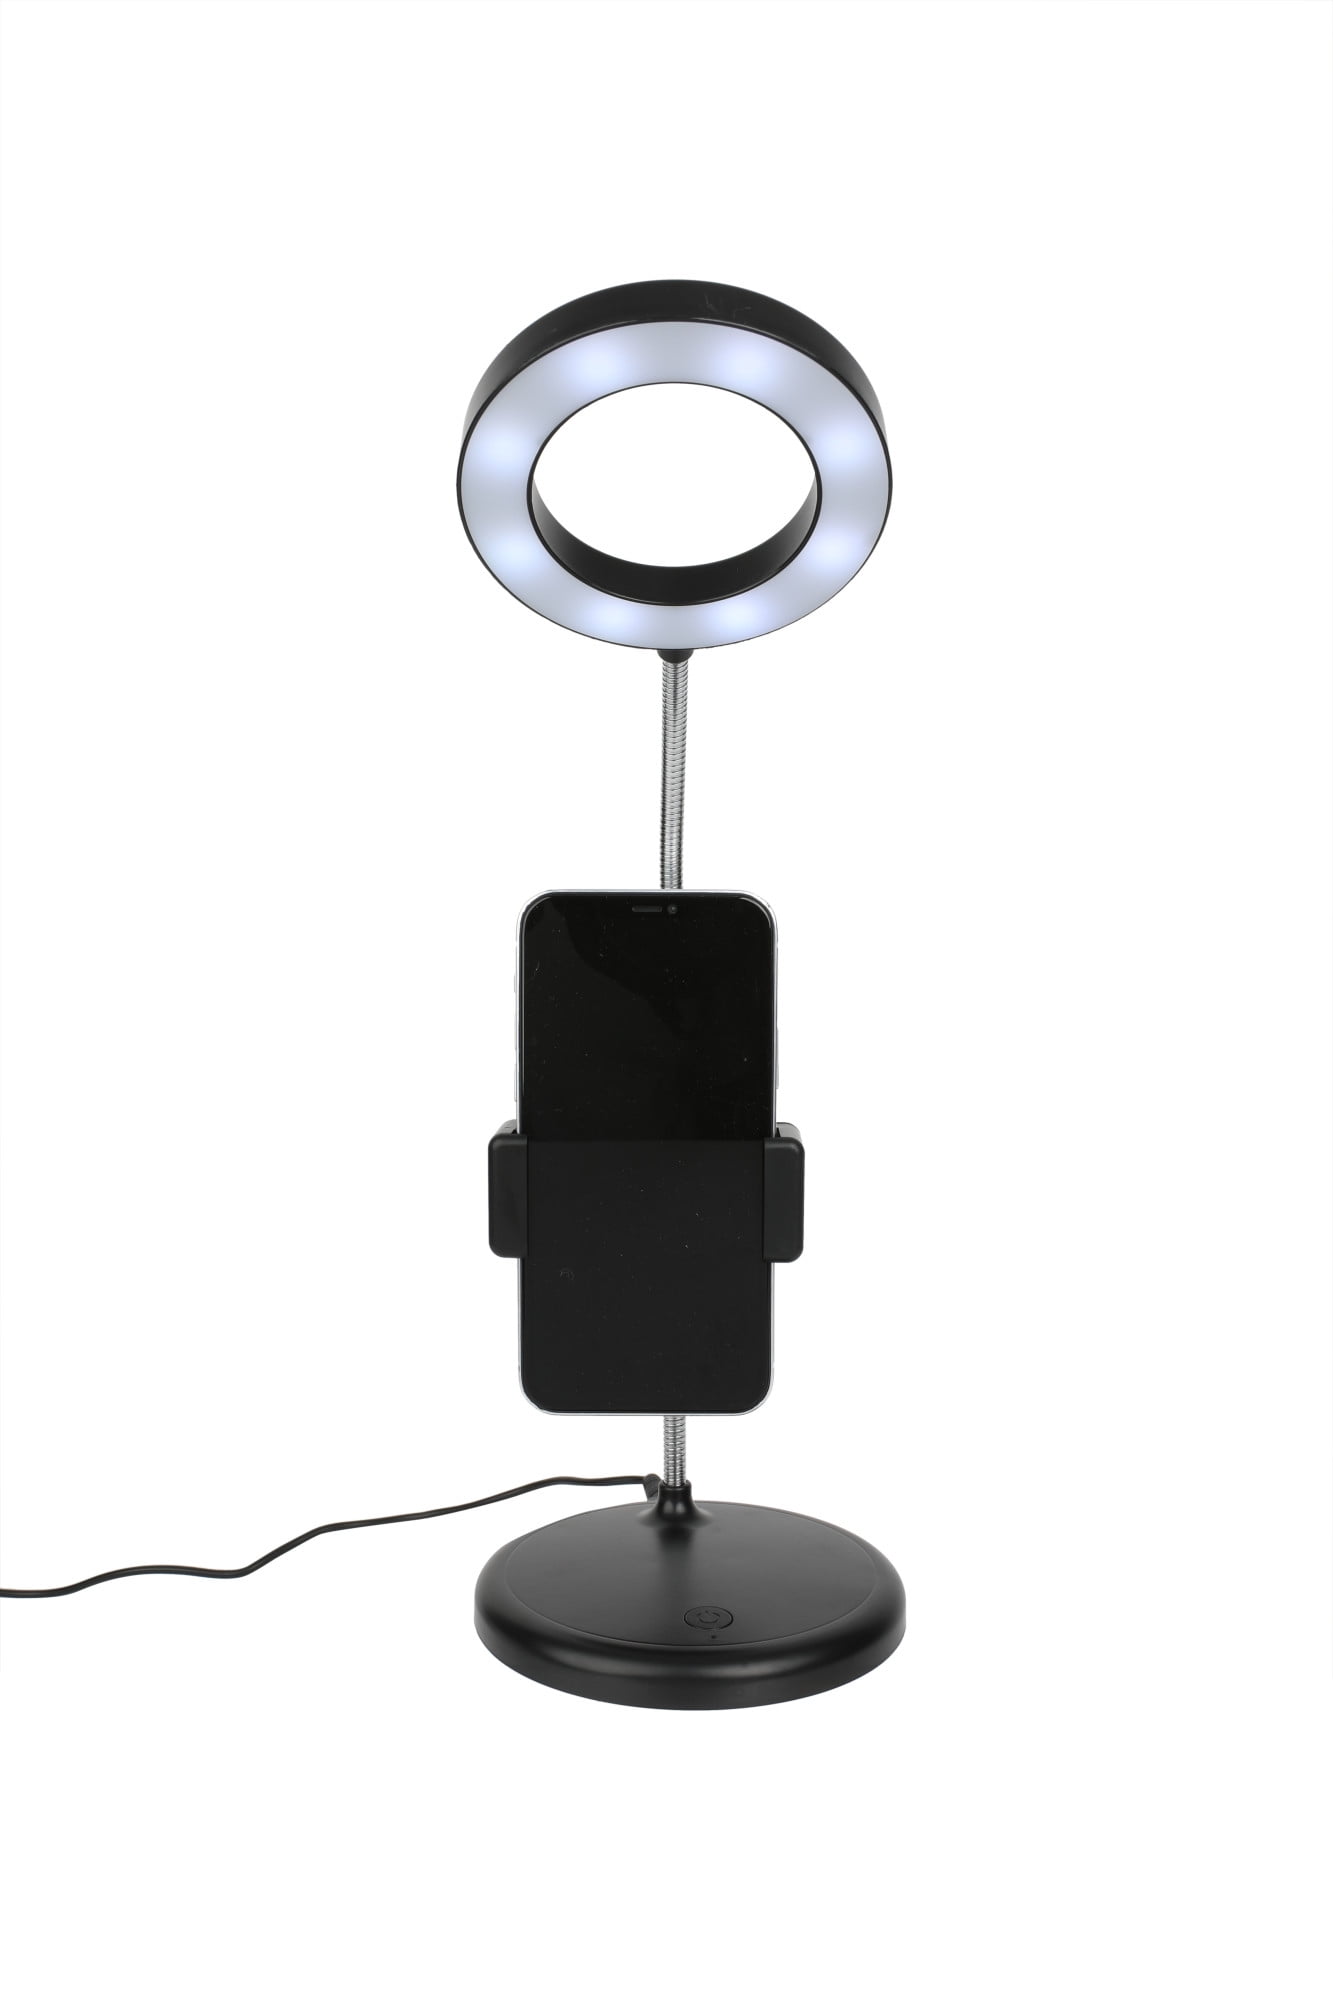 Vivitar Vlogging Desk Lamp with White LED Ring Light and Smart Phone Holder 965f34ba 3e92 4bd9 bff4 cfb2554520b9.2621350e68561629cc78ea3fbcc7eee4